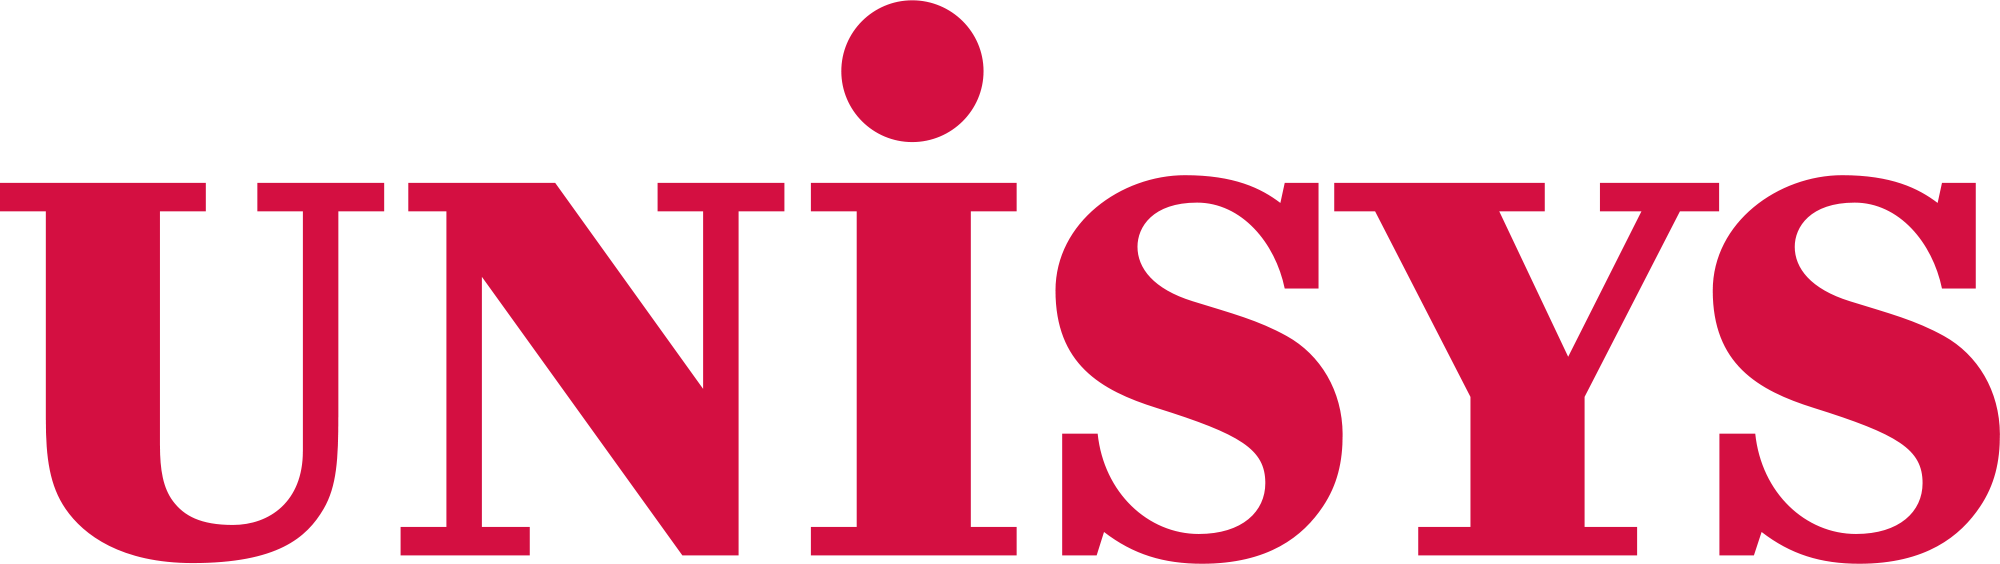 unisys logo.png